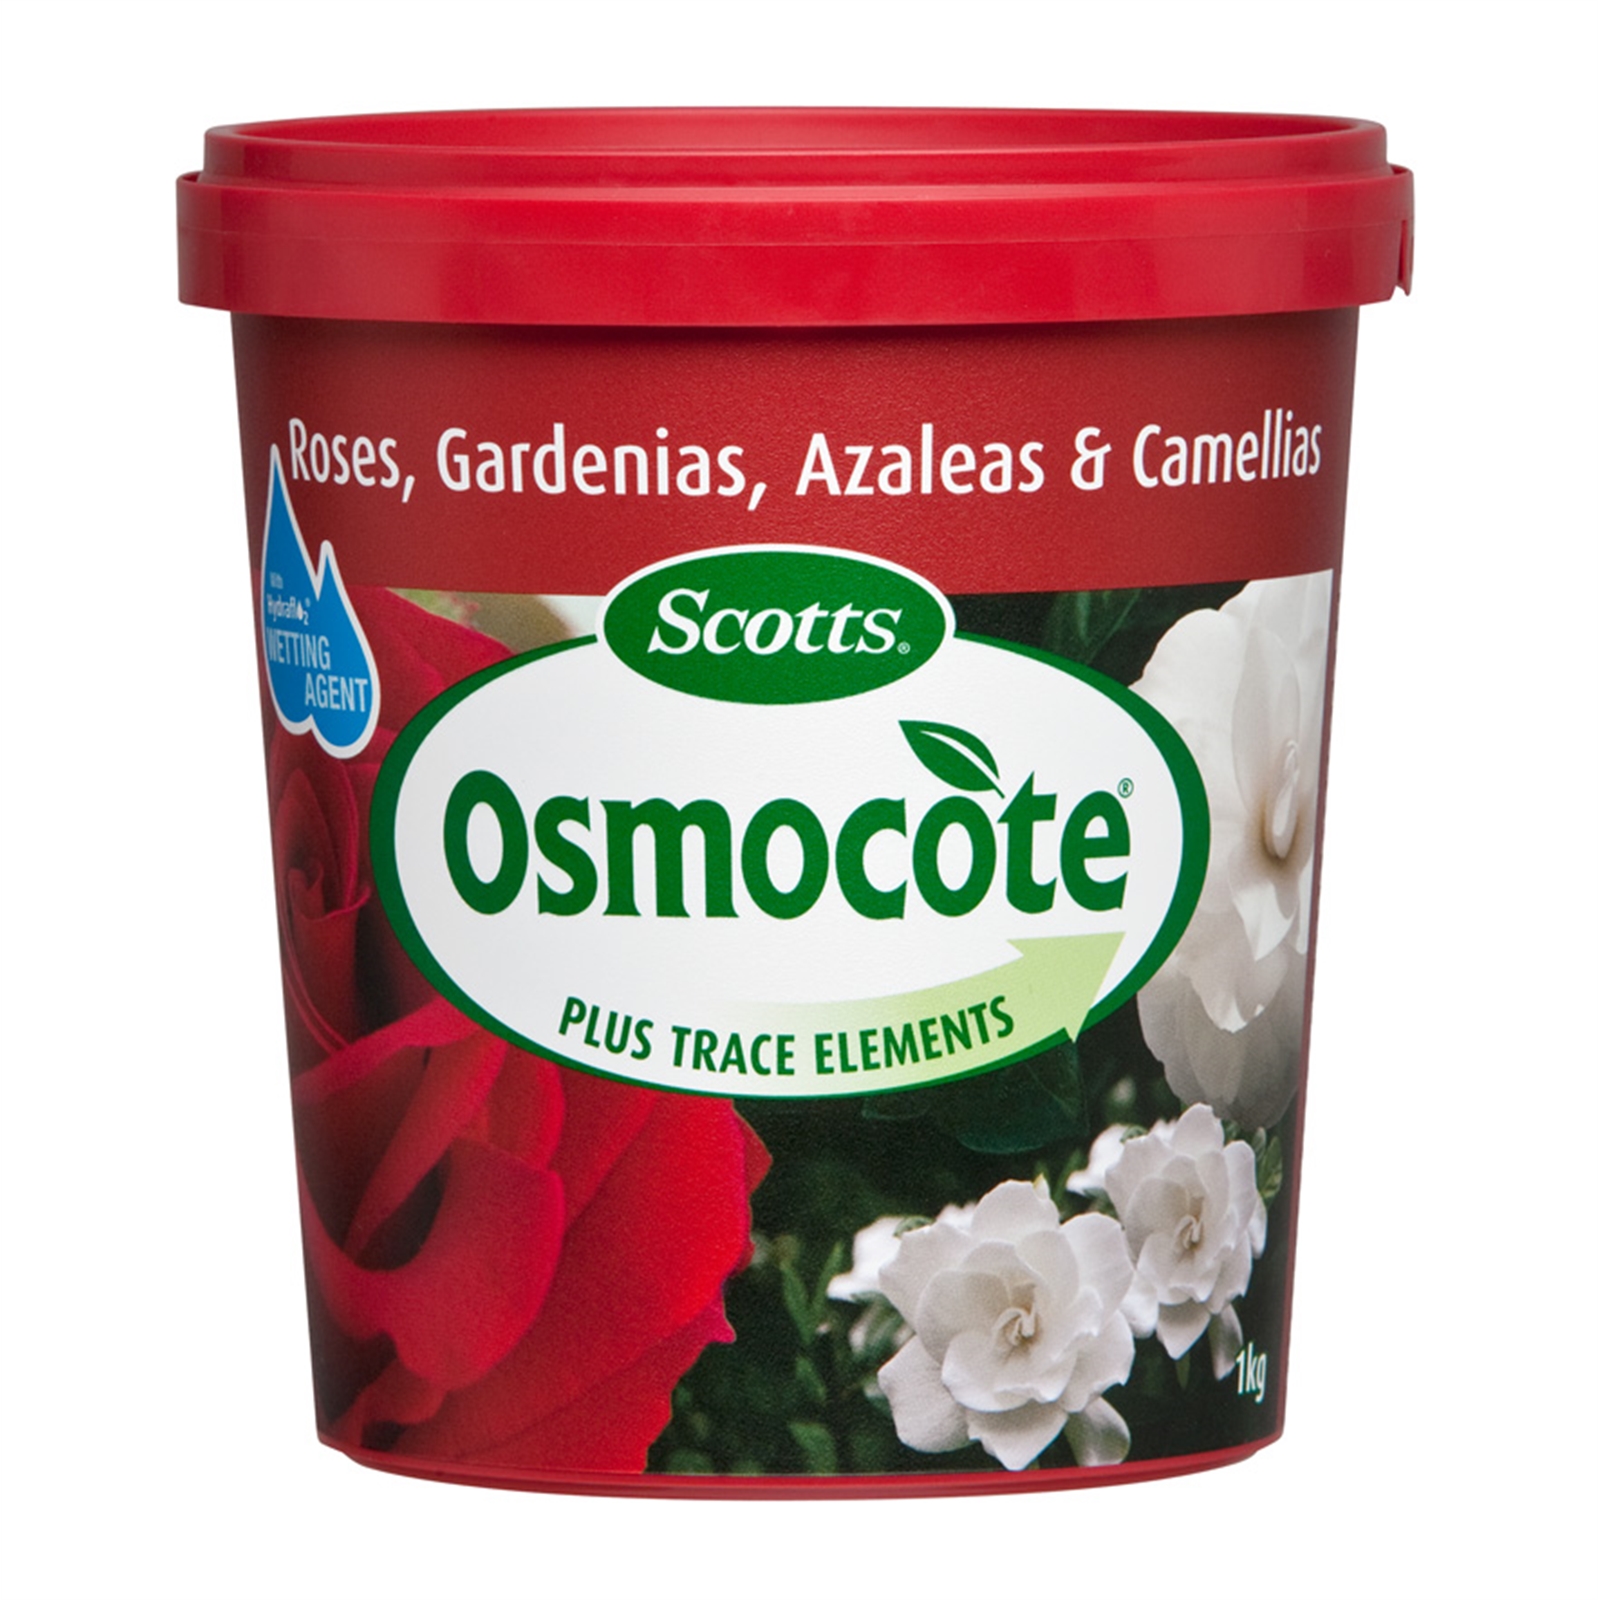 Osmocote 1kg Roses, Gardenias, Azaleas and Camellias Controlled Release Fertiliser